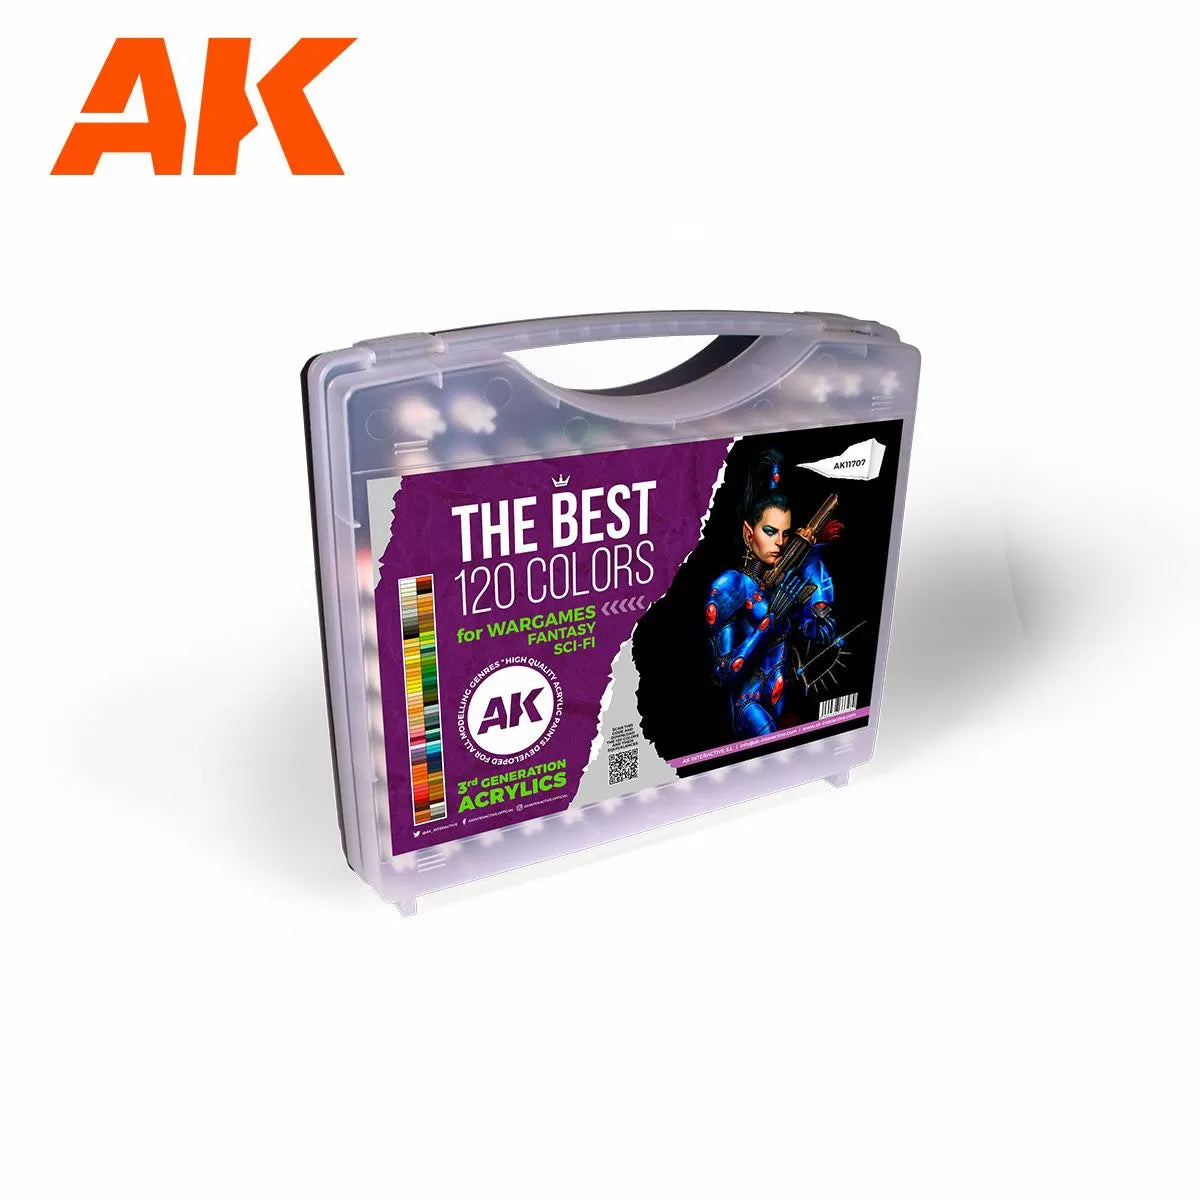 AK Interactve 3Gen Acrylics - Briefcase 120 Best Colours for Wargames, Fantasy and SciFi